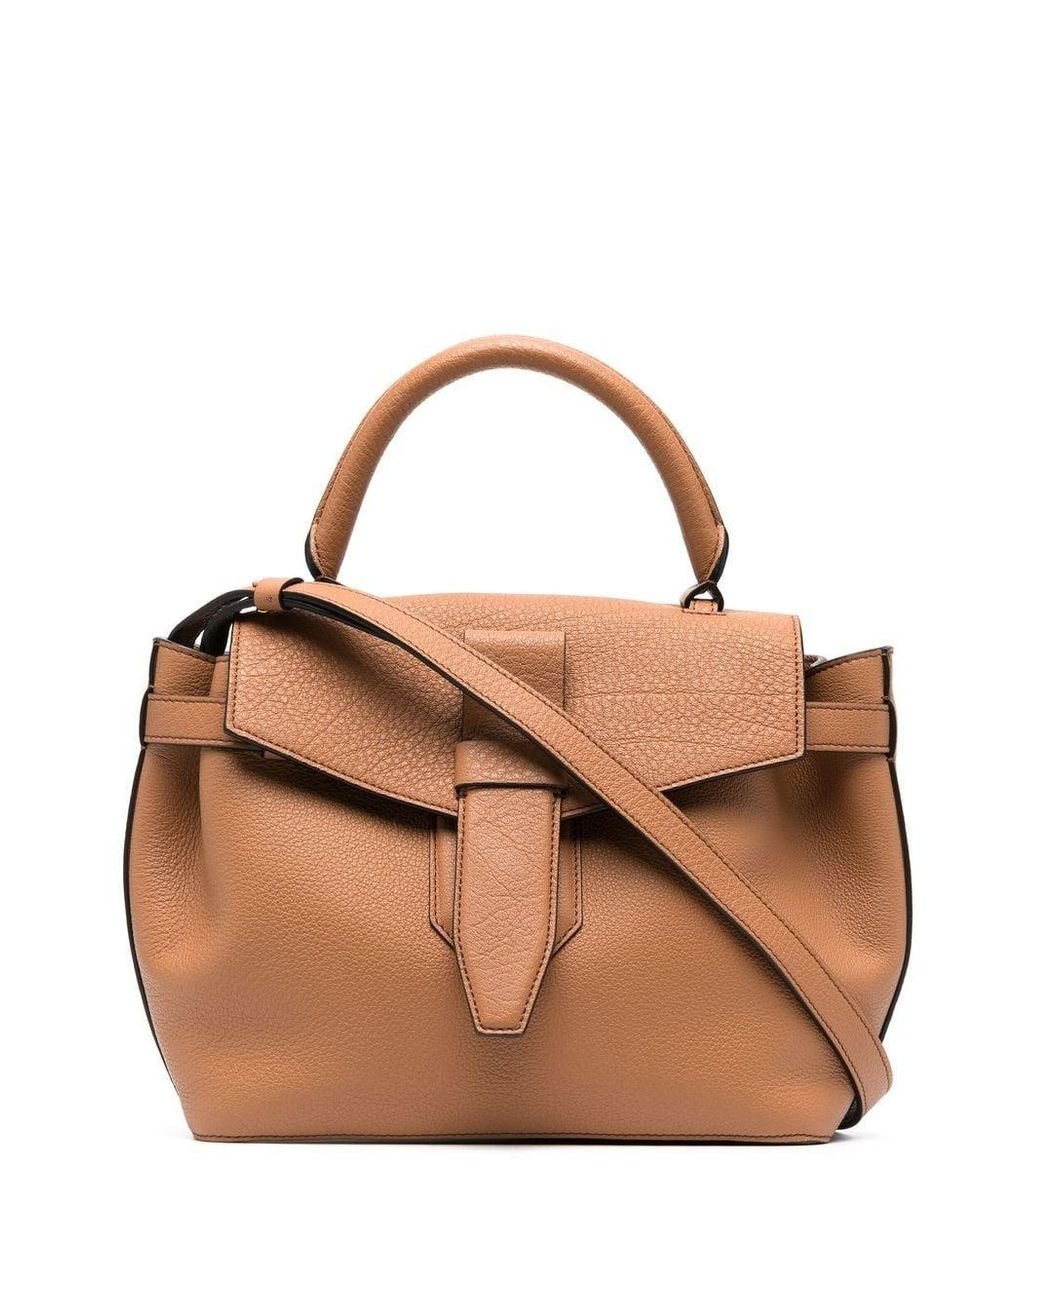 Lancel Charlie Leather Tote Bag in Brown | Lyst